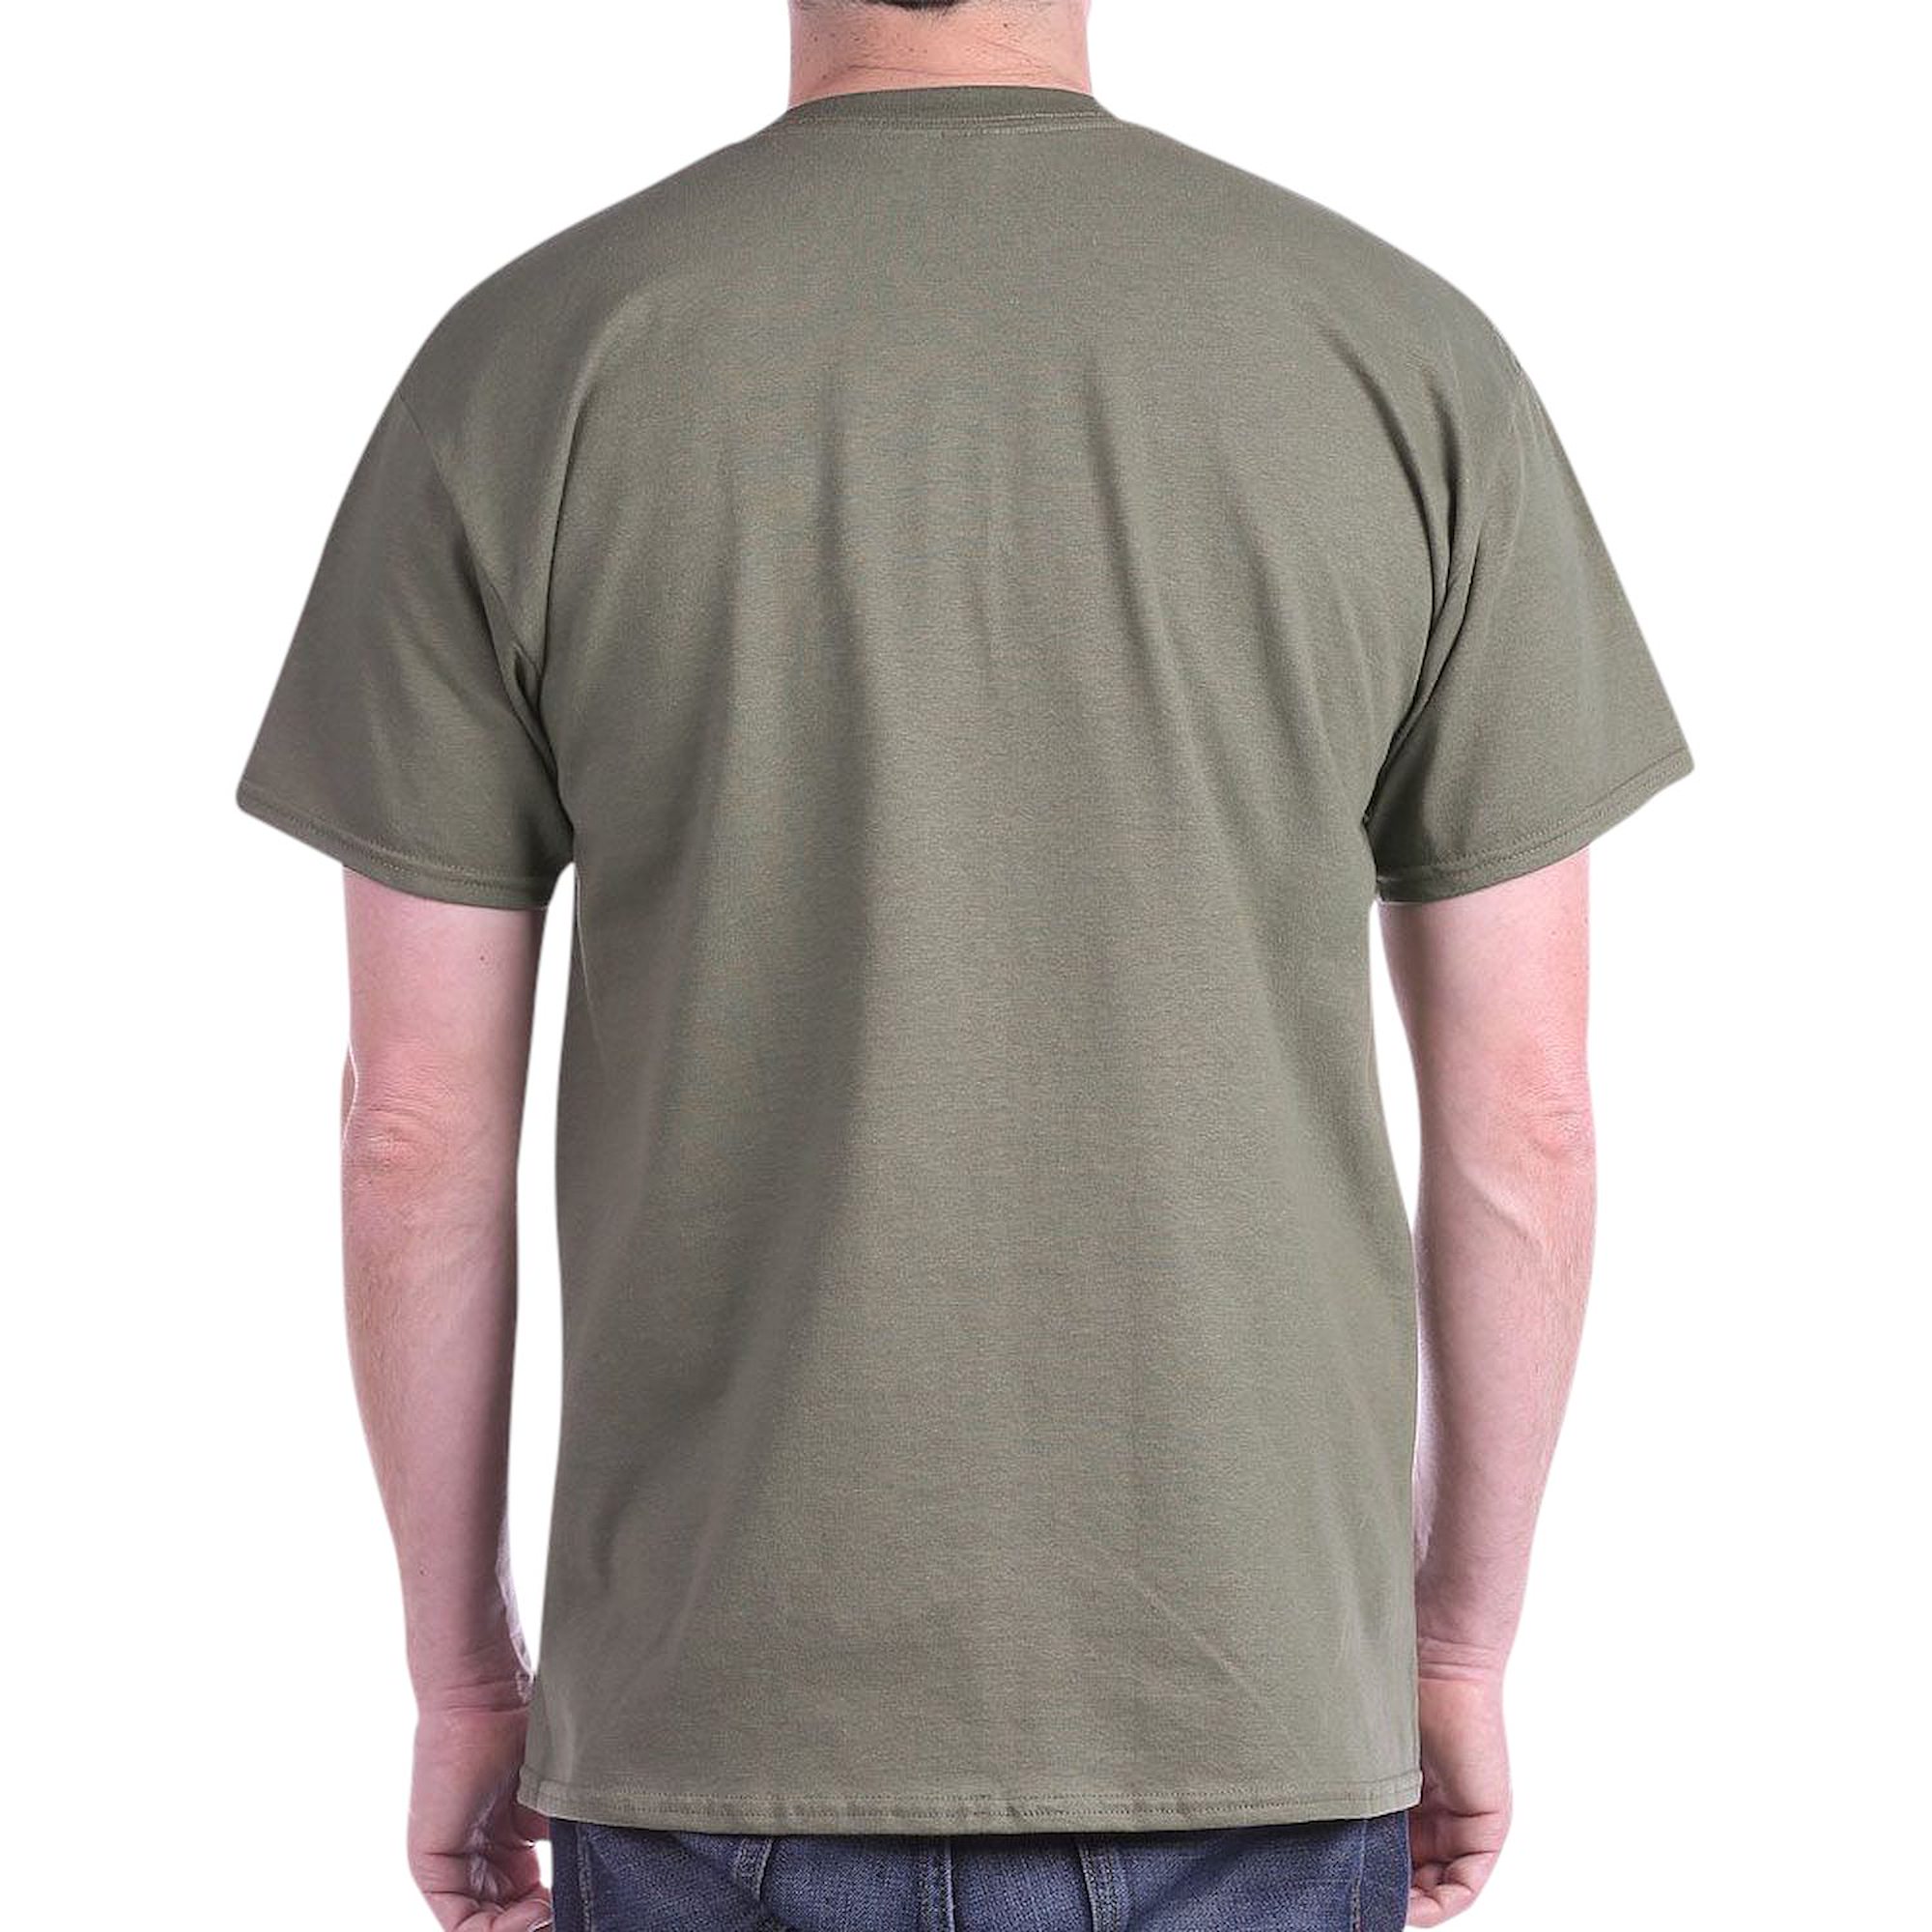 CafePress - Dark T Shirt - 100% Cotton T-Shirt - image 2 of 4